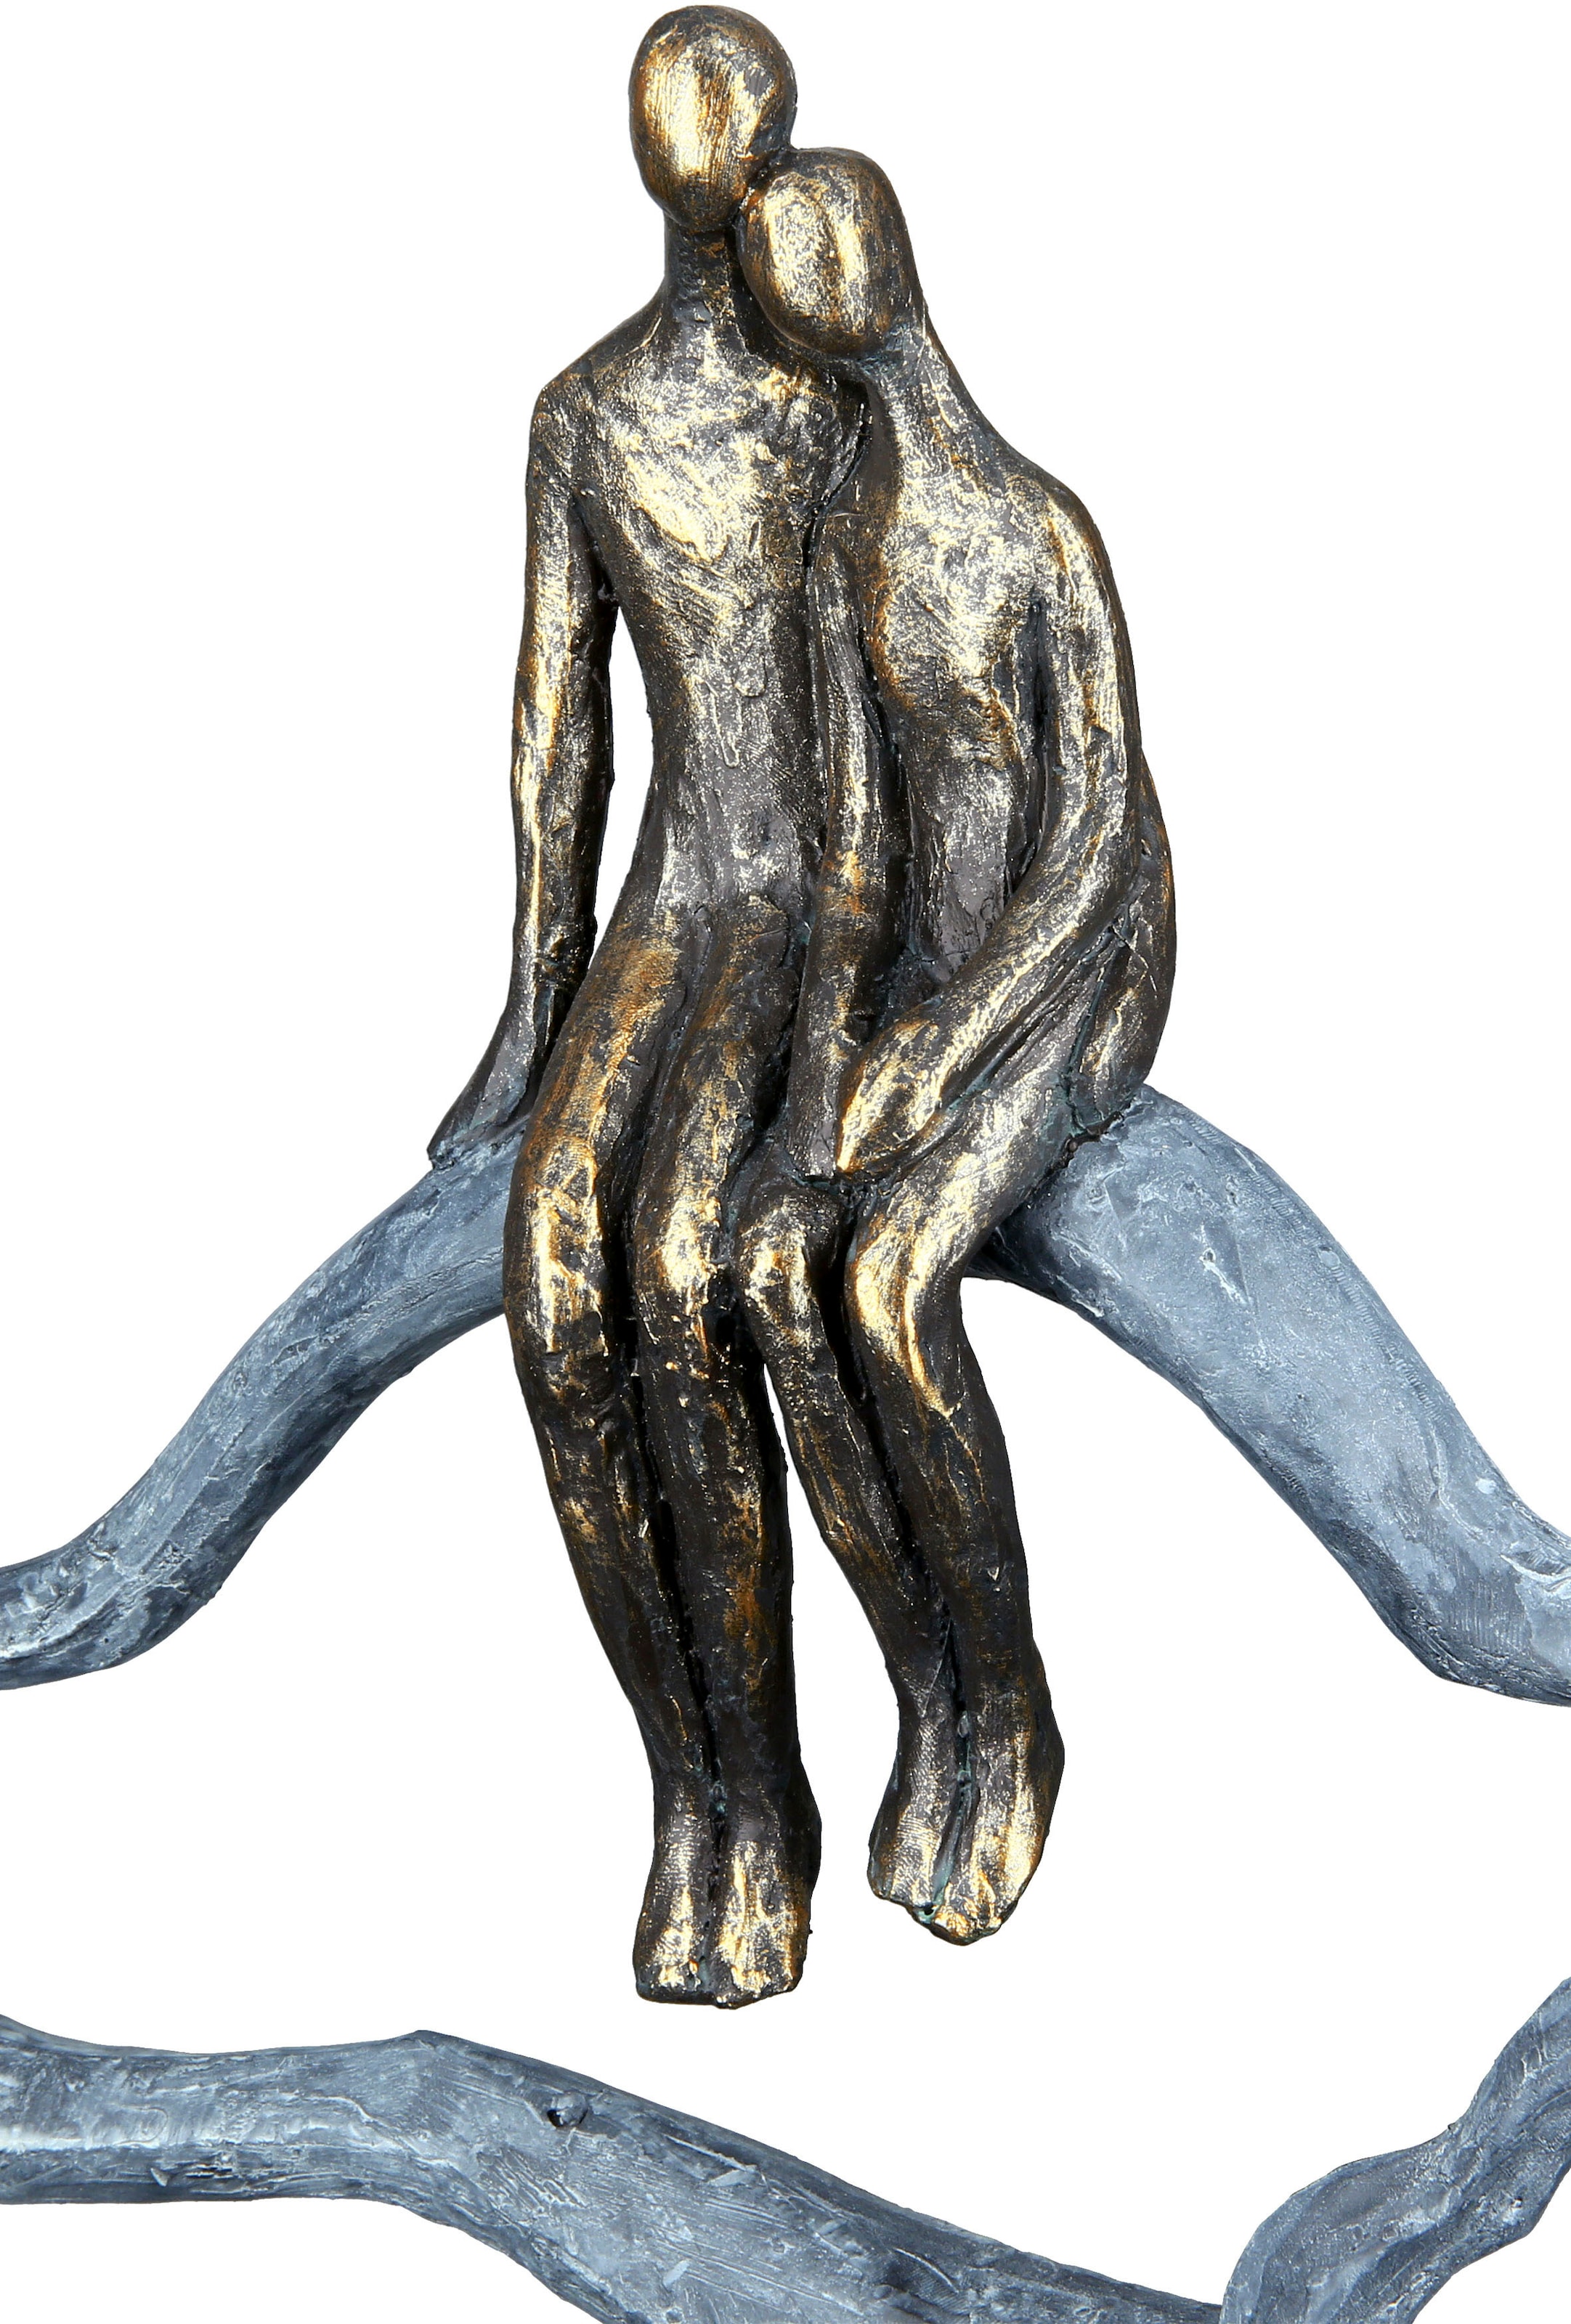 Casablanca by Gilde Dekofigur »Skulptur Lovecloud, bronzefarben/grau«, grau